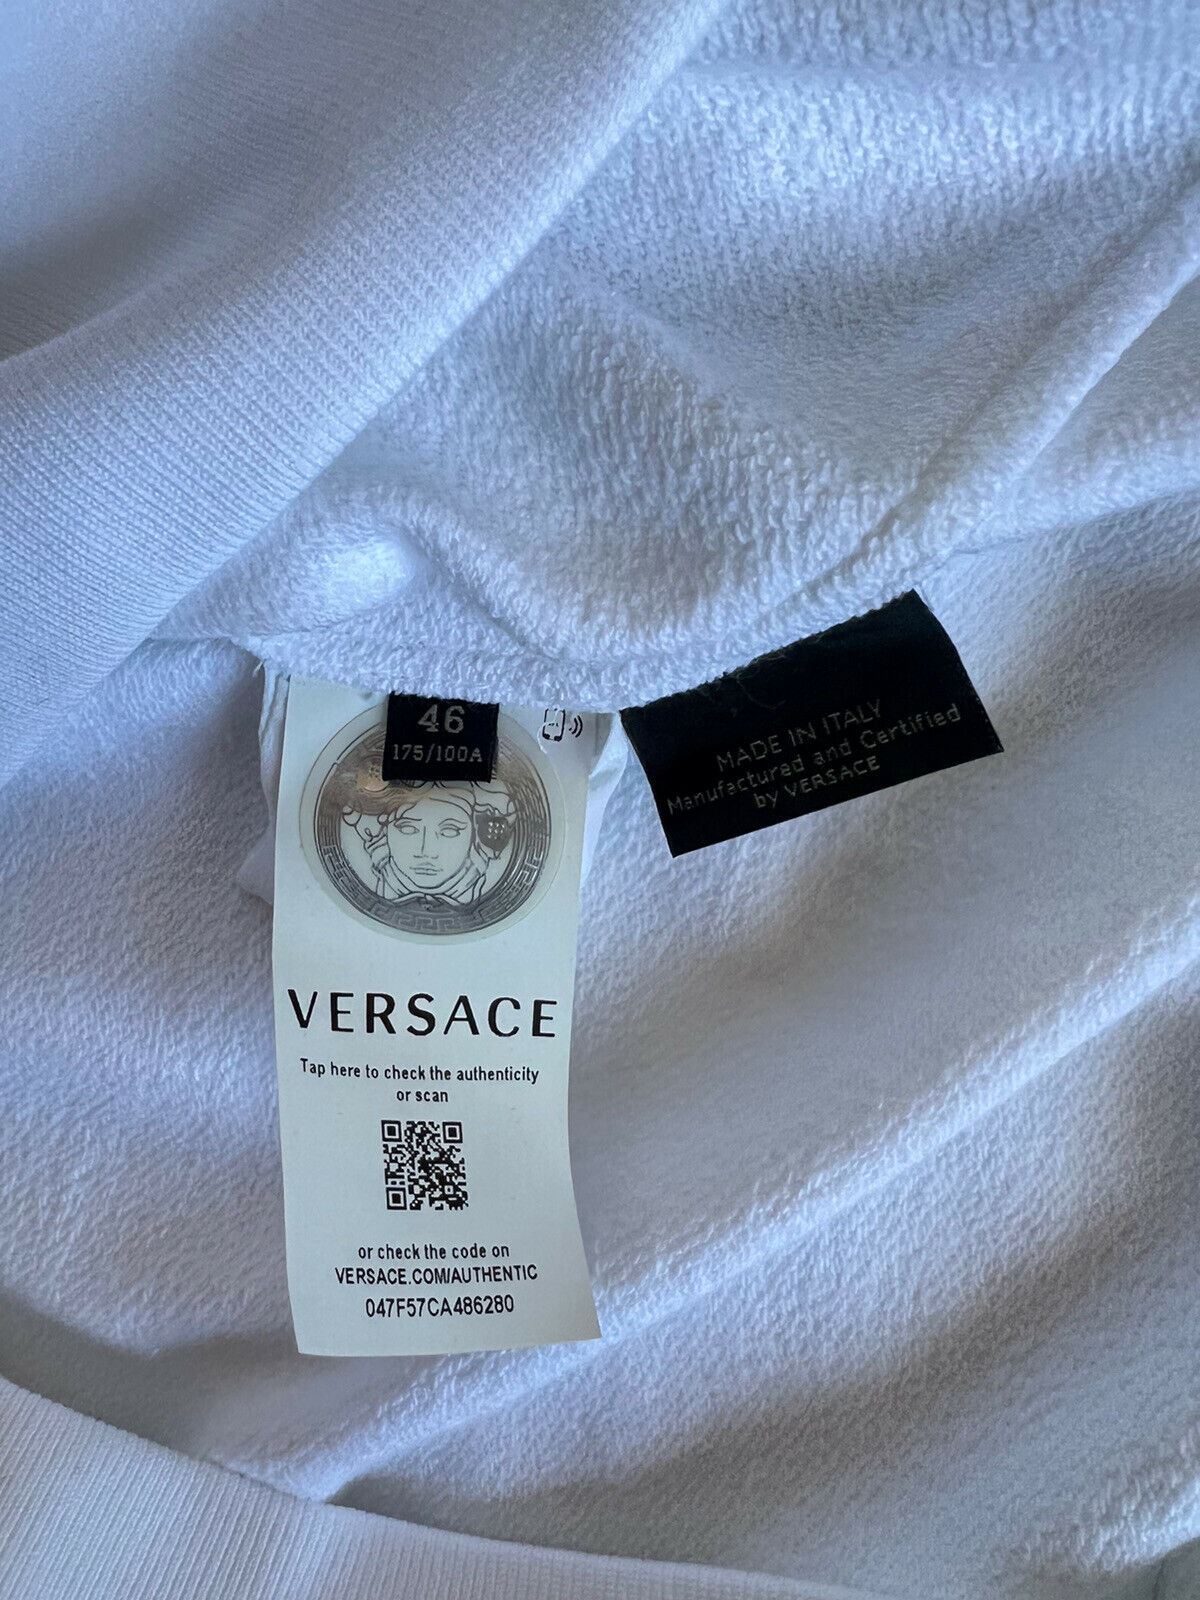 NWT $695 Versace Women's White Hoodie Sweater 12 US (46 Euro) Italy A83937